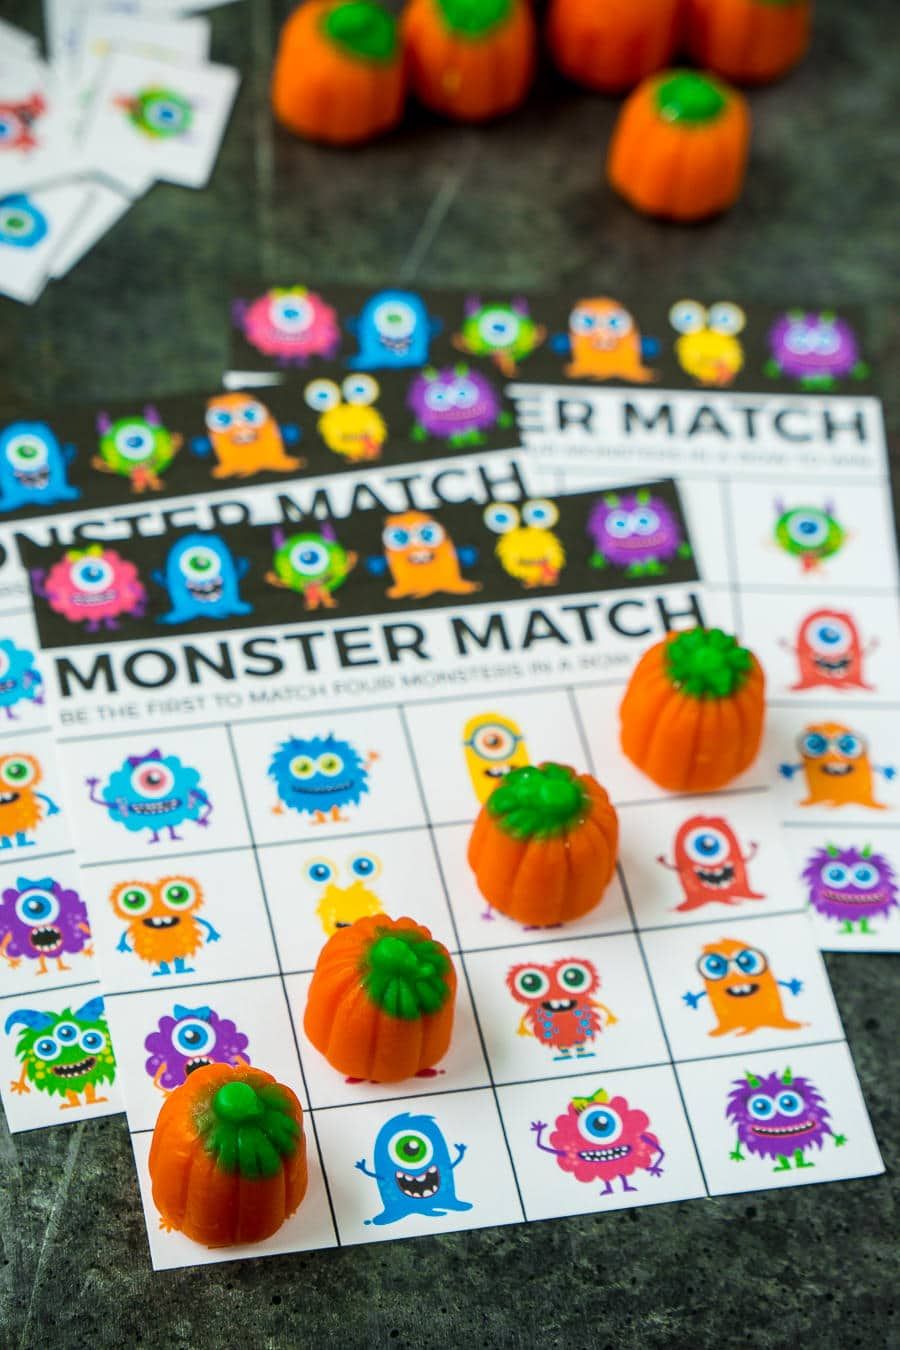 A Halloween bingókártyák a Monster Mash ihlette